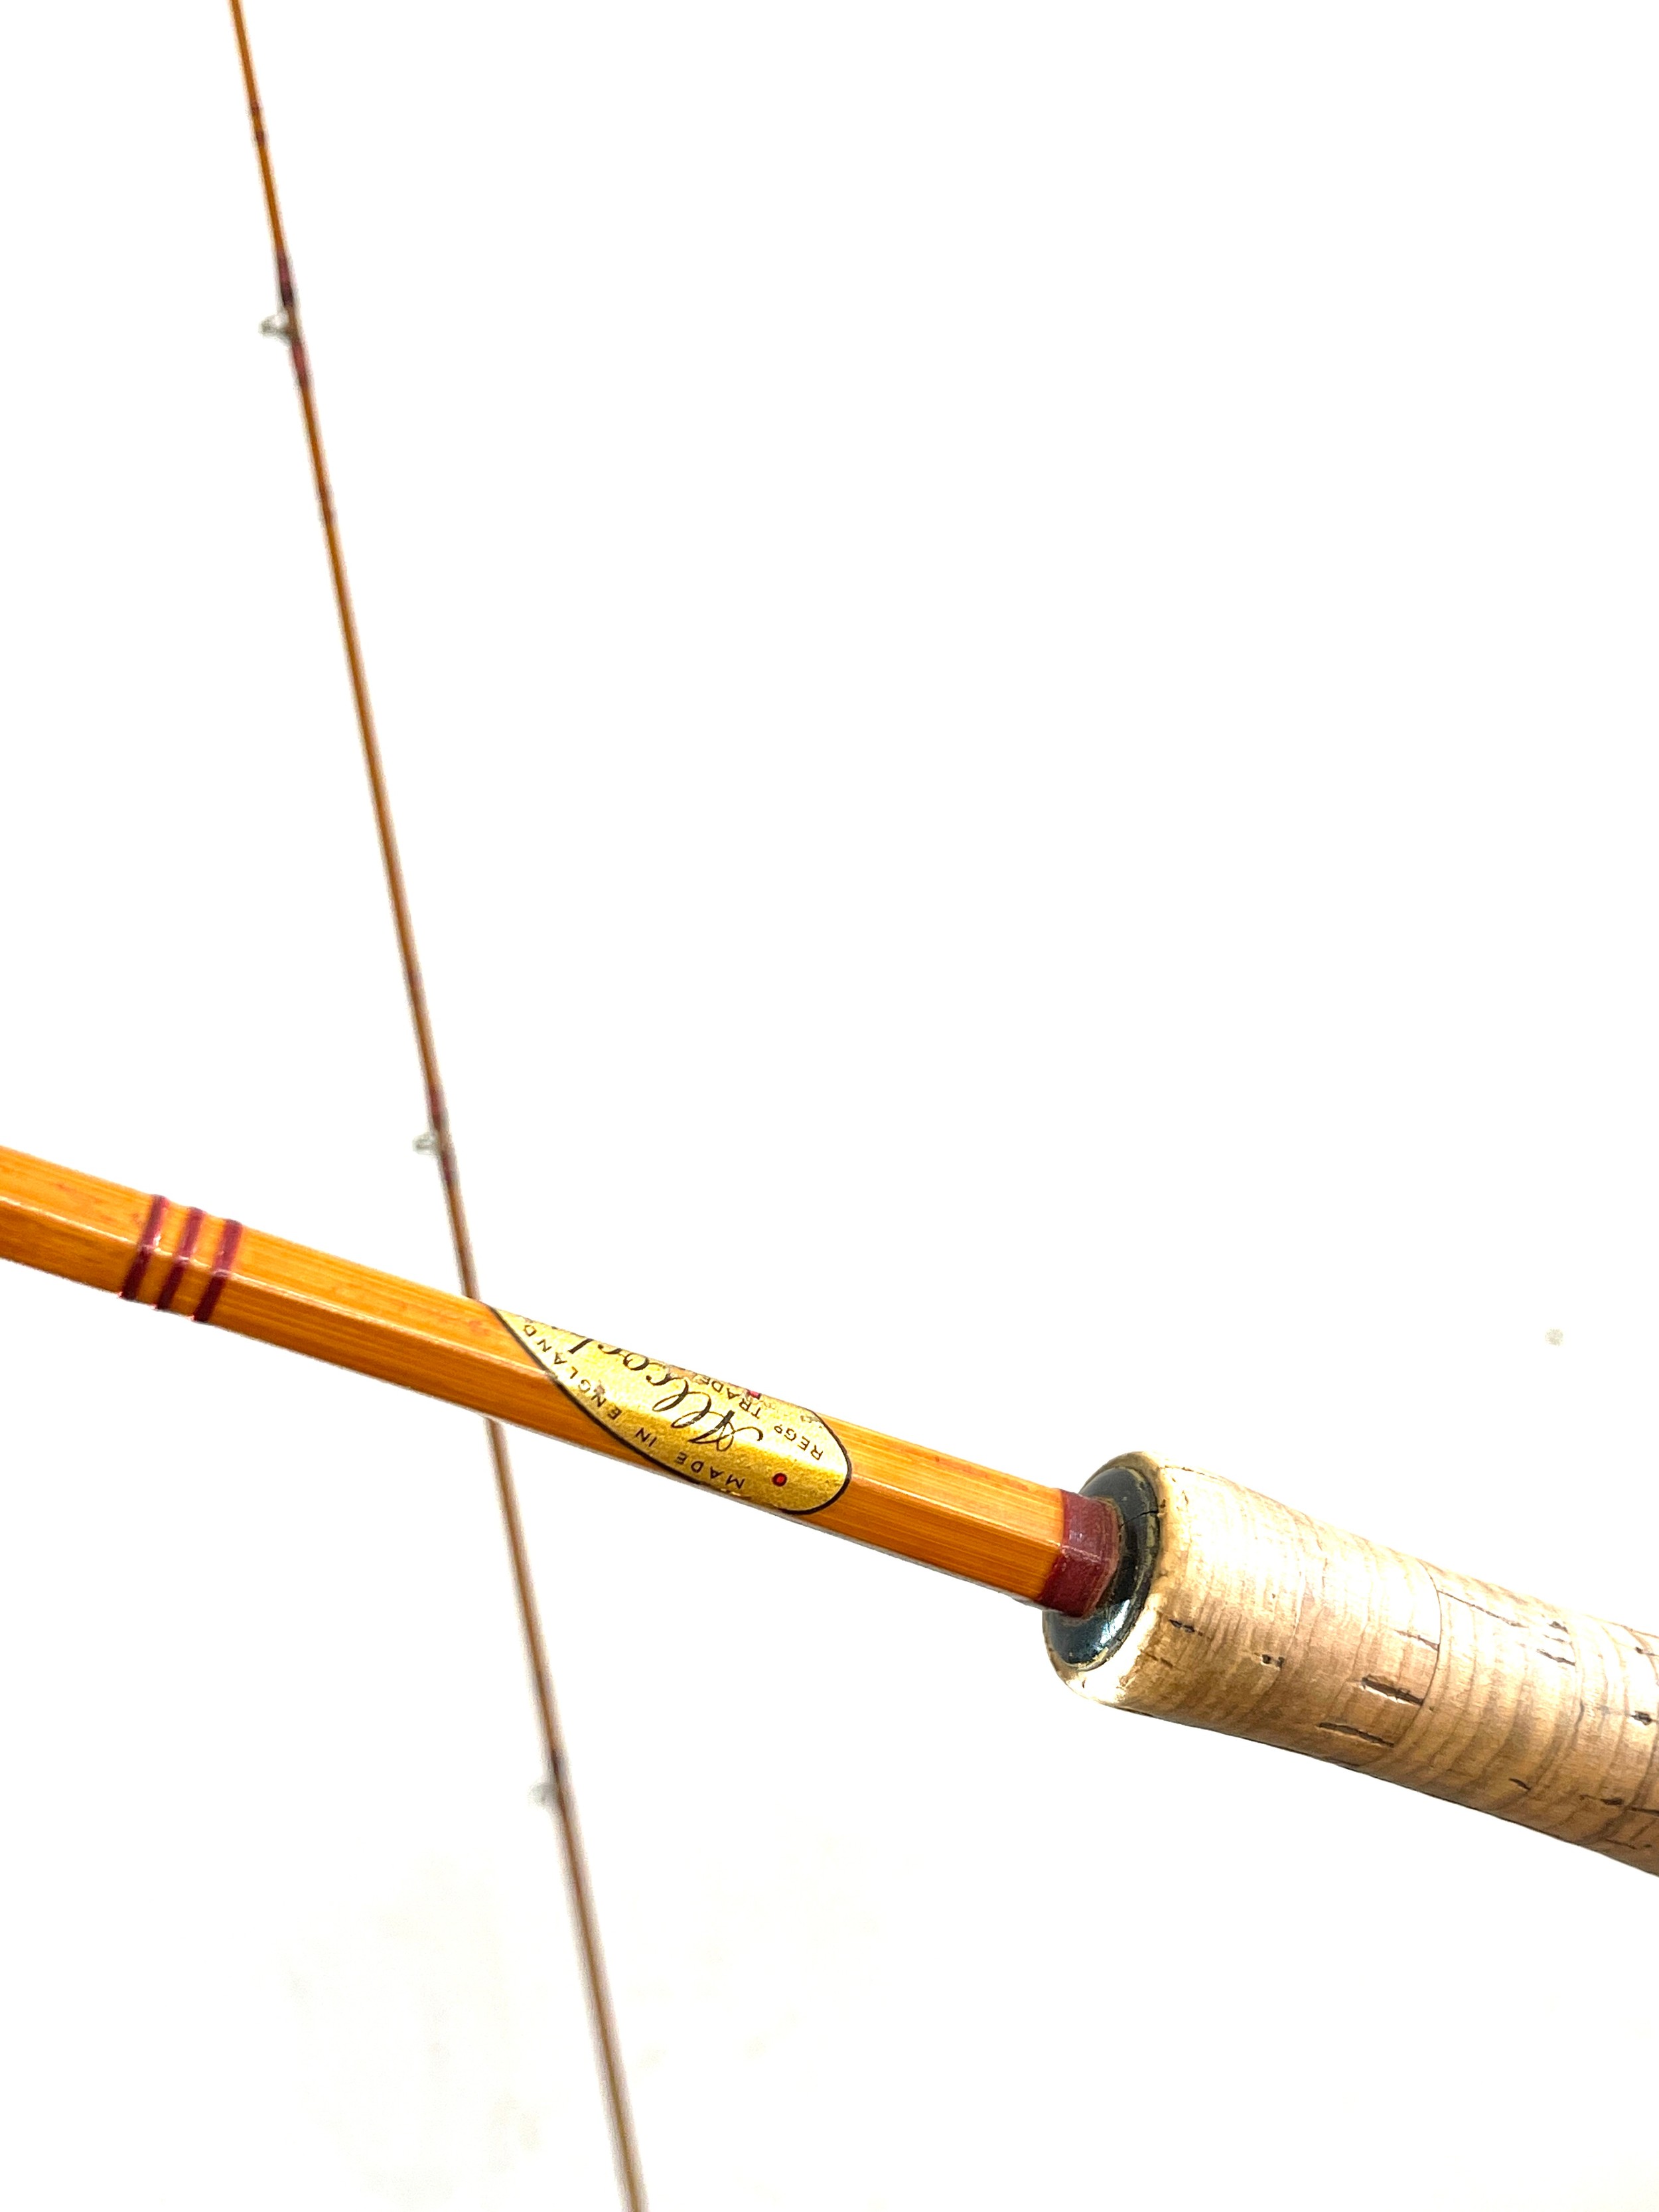 Allcock's vintage Marvel split cane fishing rod, with case - Image 7 of 8